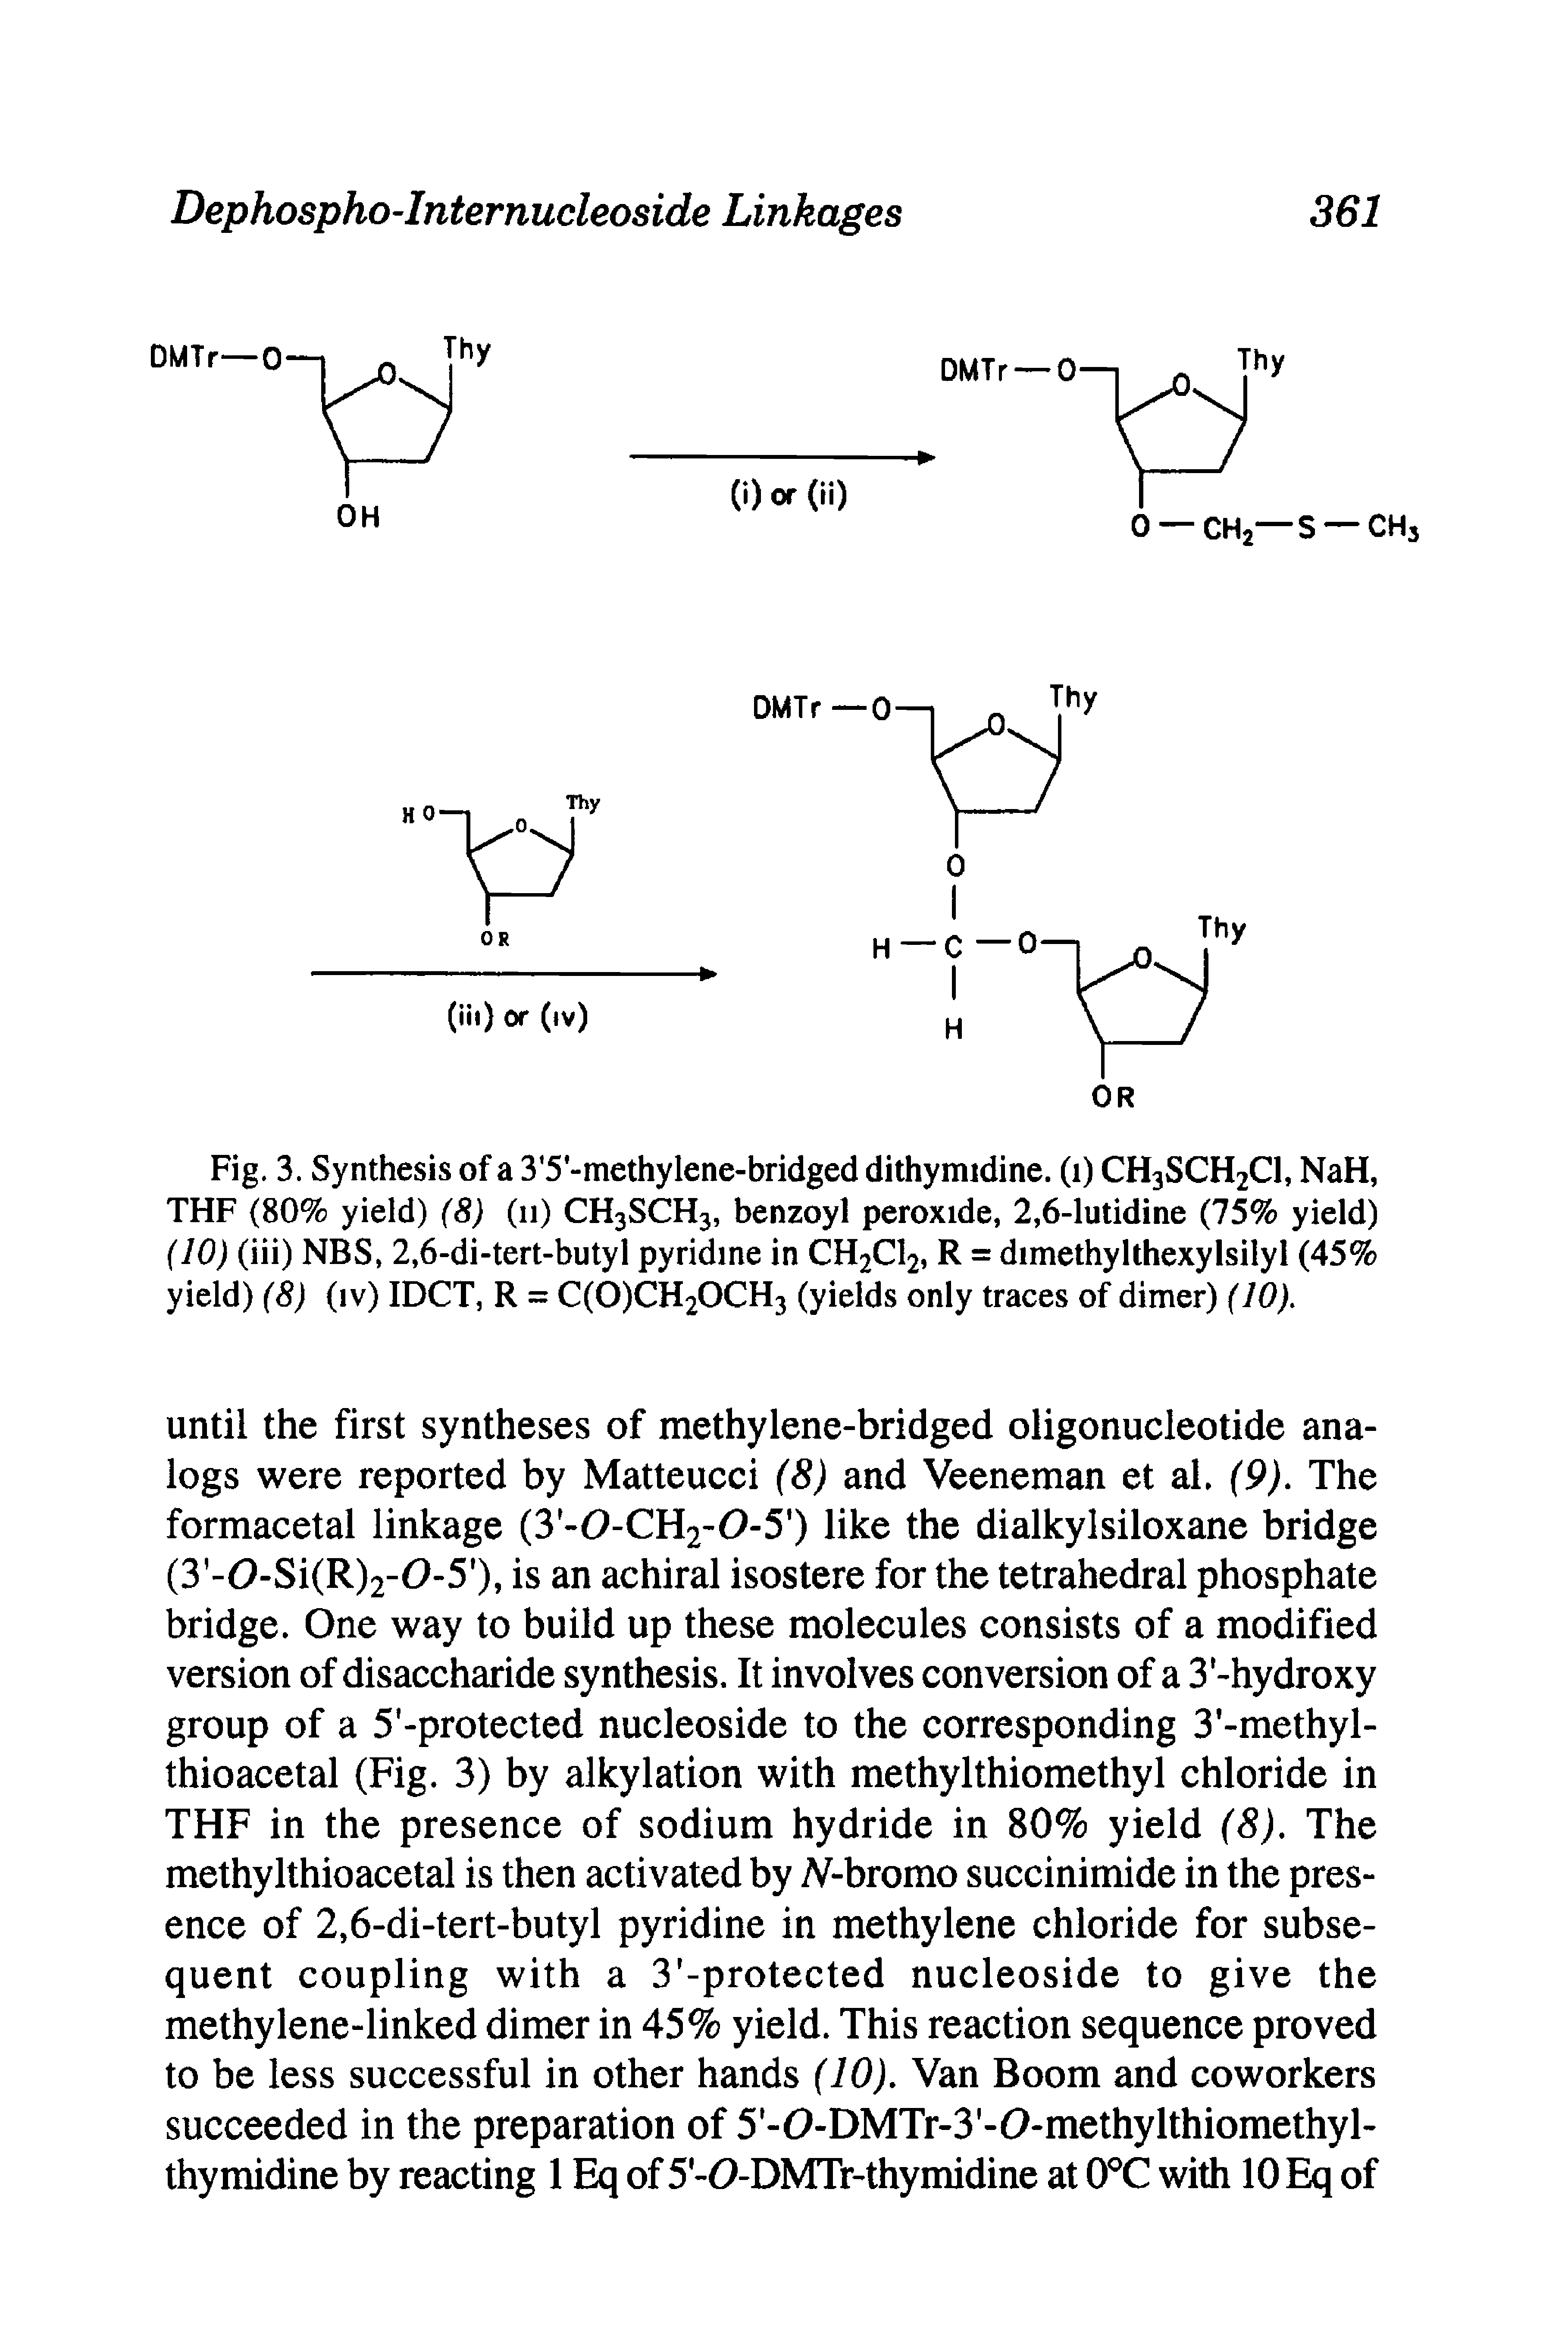 Fig. 3. Synthesis of a 3 5 -methylene-bridged dithynudine. (i) CH3SCH2CI, NaH, THF (80% yield) (8) (11) CH3SCH3, benzoyl peroxide, 2,6-lutidine (75% yield) (10) (iii) NBS, 2,6-di-tert-butyl pyridine in CH2CI2, R = dimethylthexylsilyl (45% yield) (8) (iv) IDCT, R = C(0)CH20CH3 (yields only traces of dimer) (10).